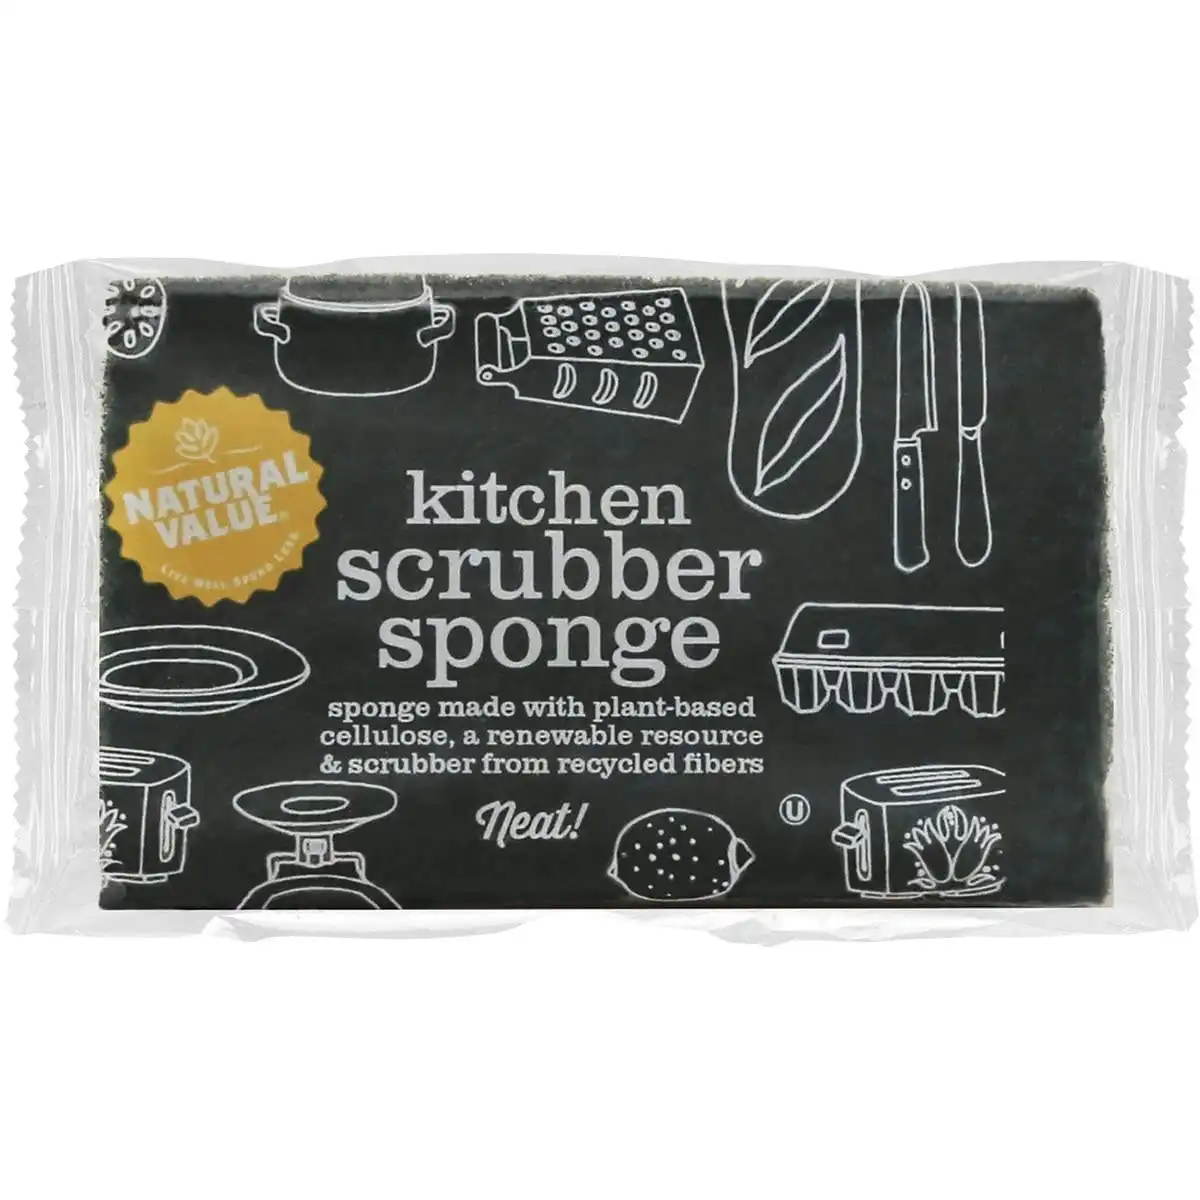 Natural Value Kitchen Scrubber Sponge 1